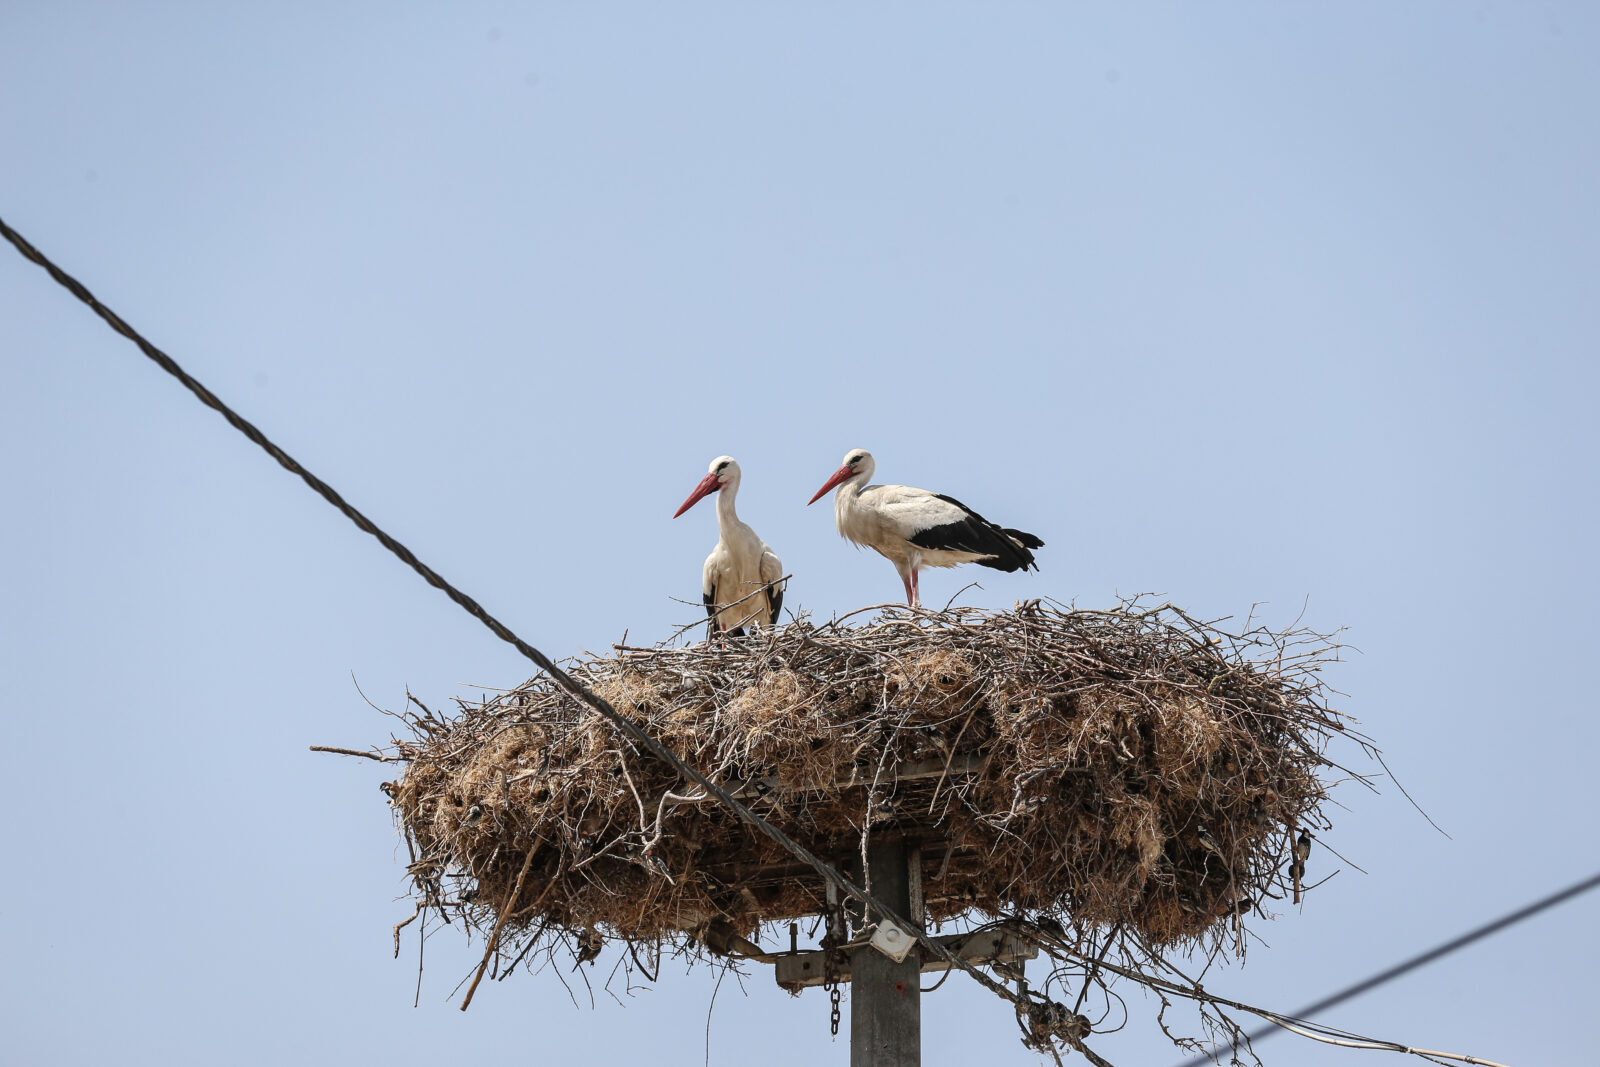 Successful rescue of Turkish fisherman's stork-friend, Yaren's chick